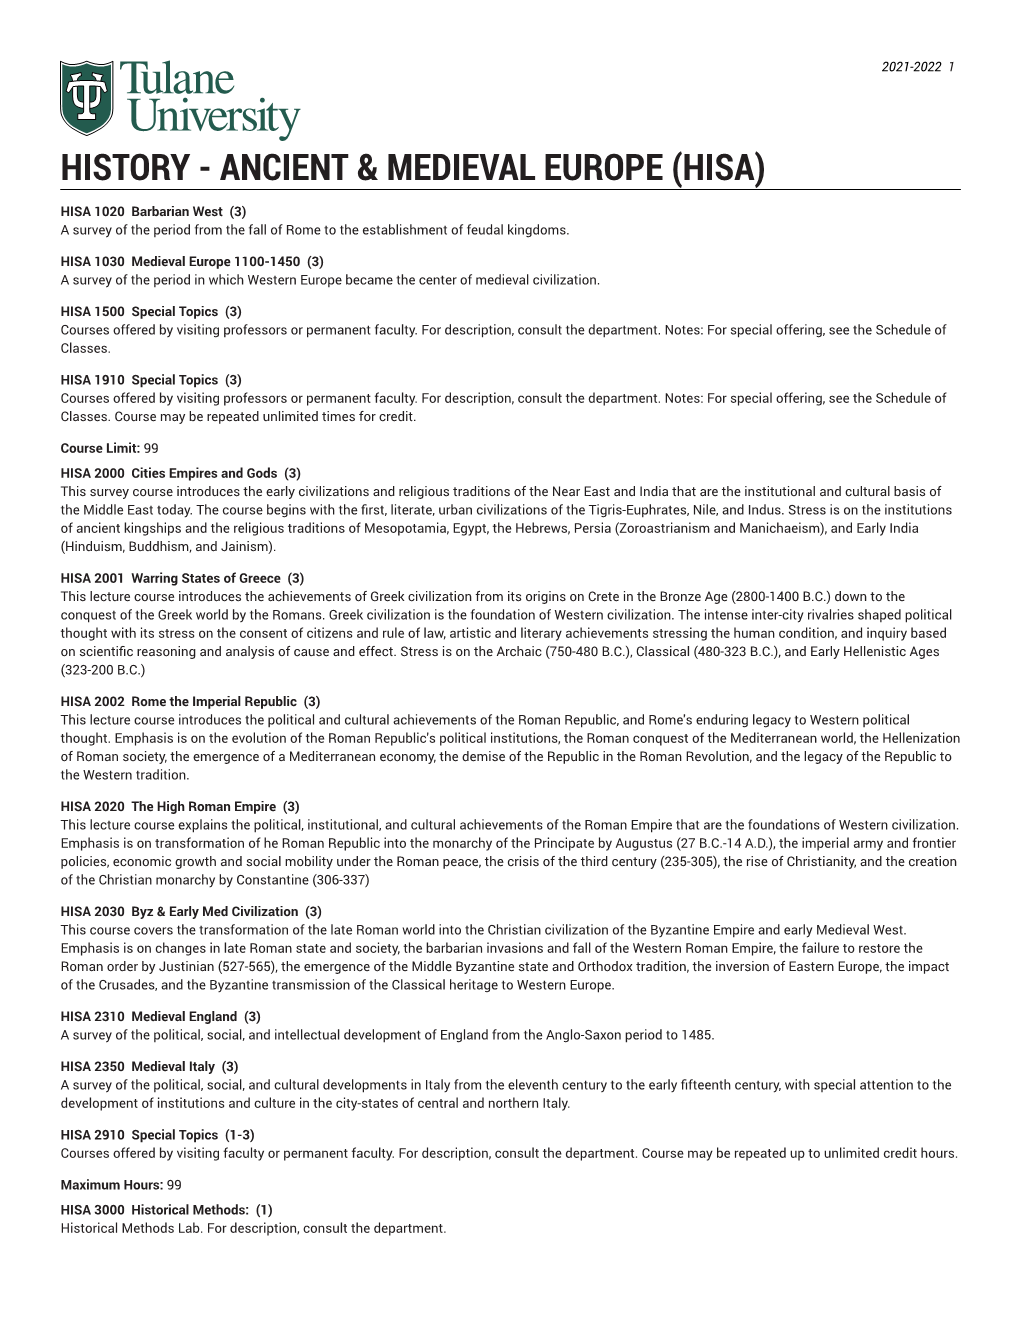 Ancient & Medieval Europe (HISA)